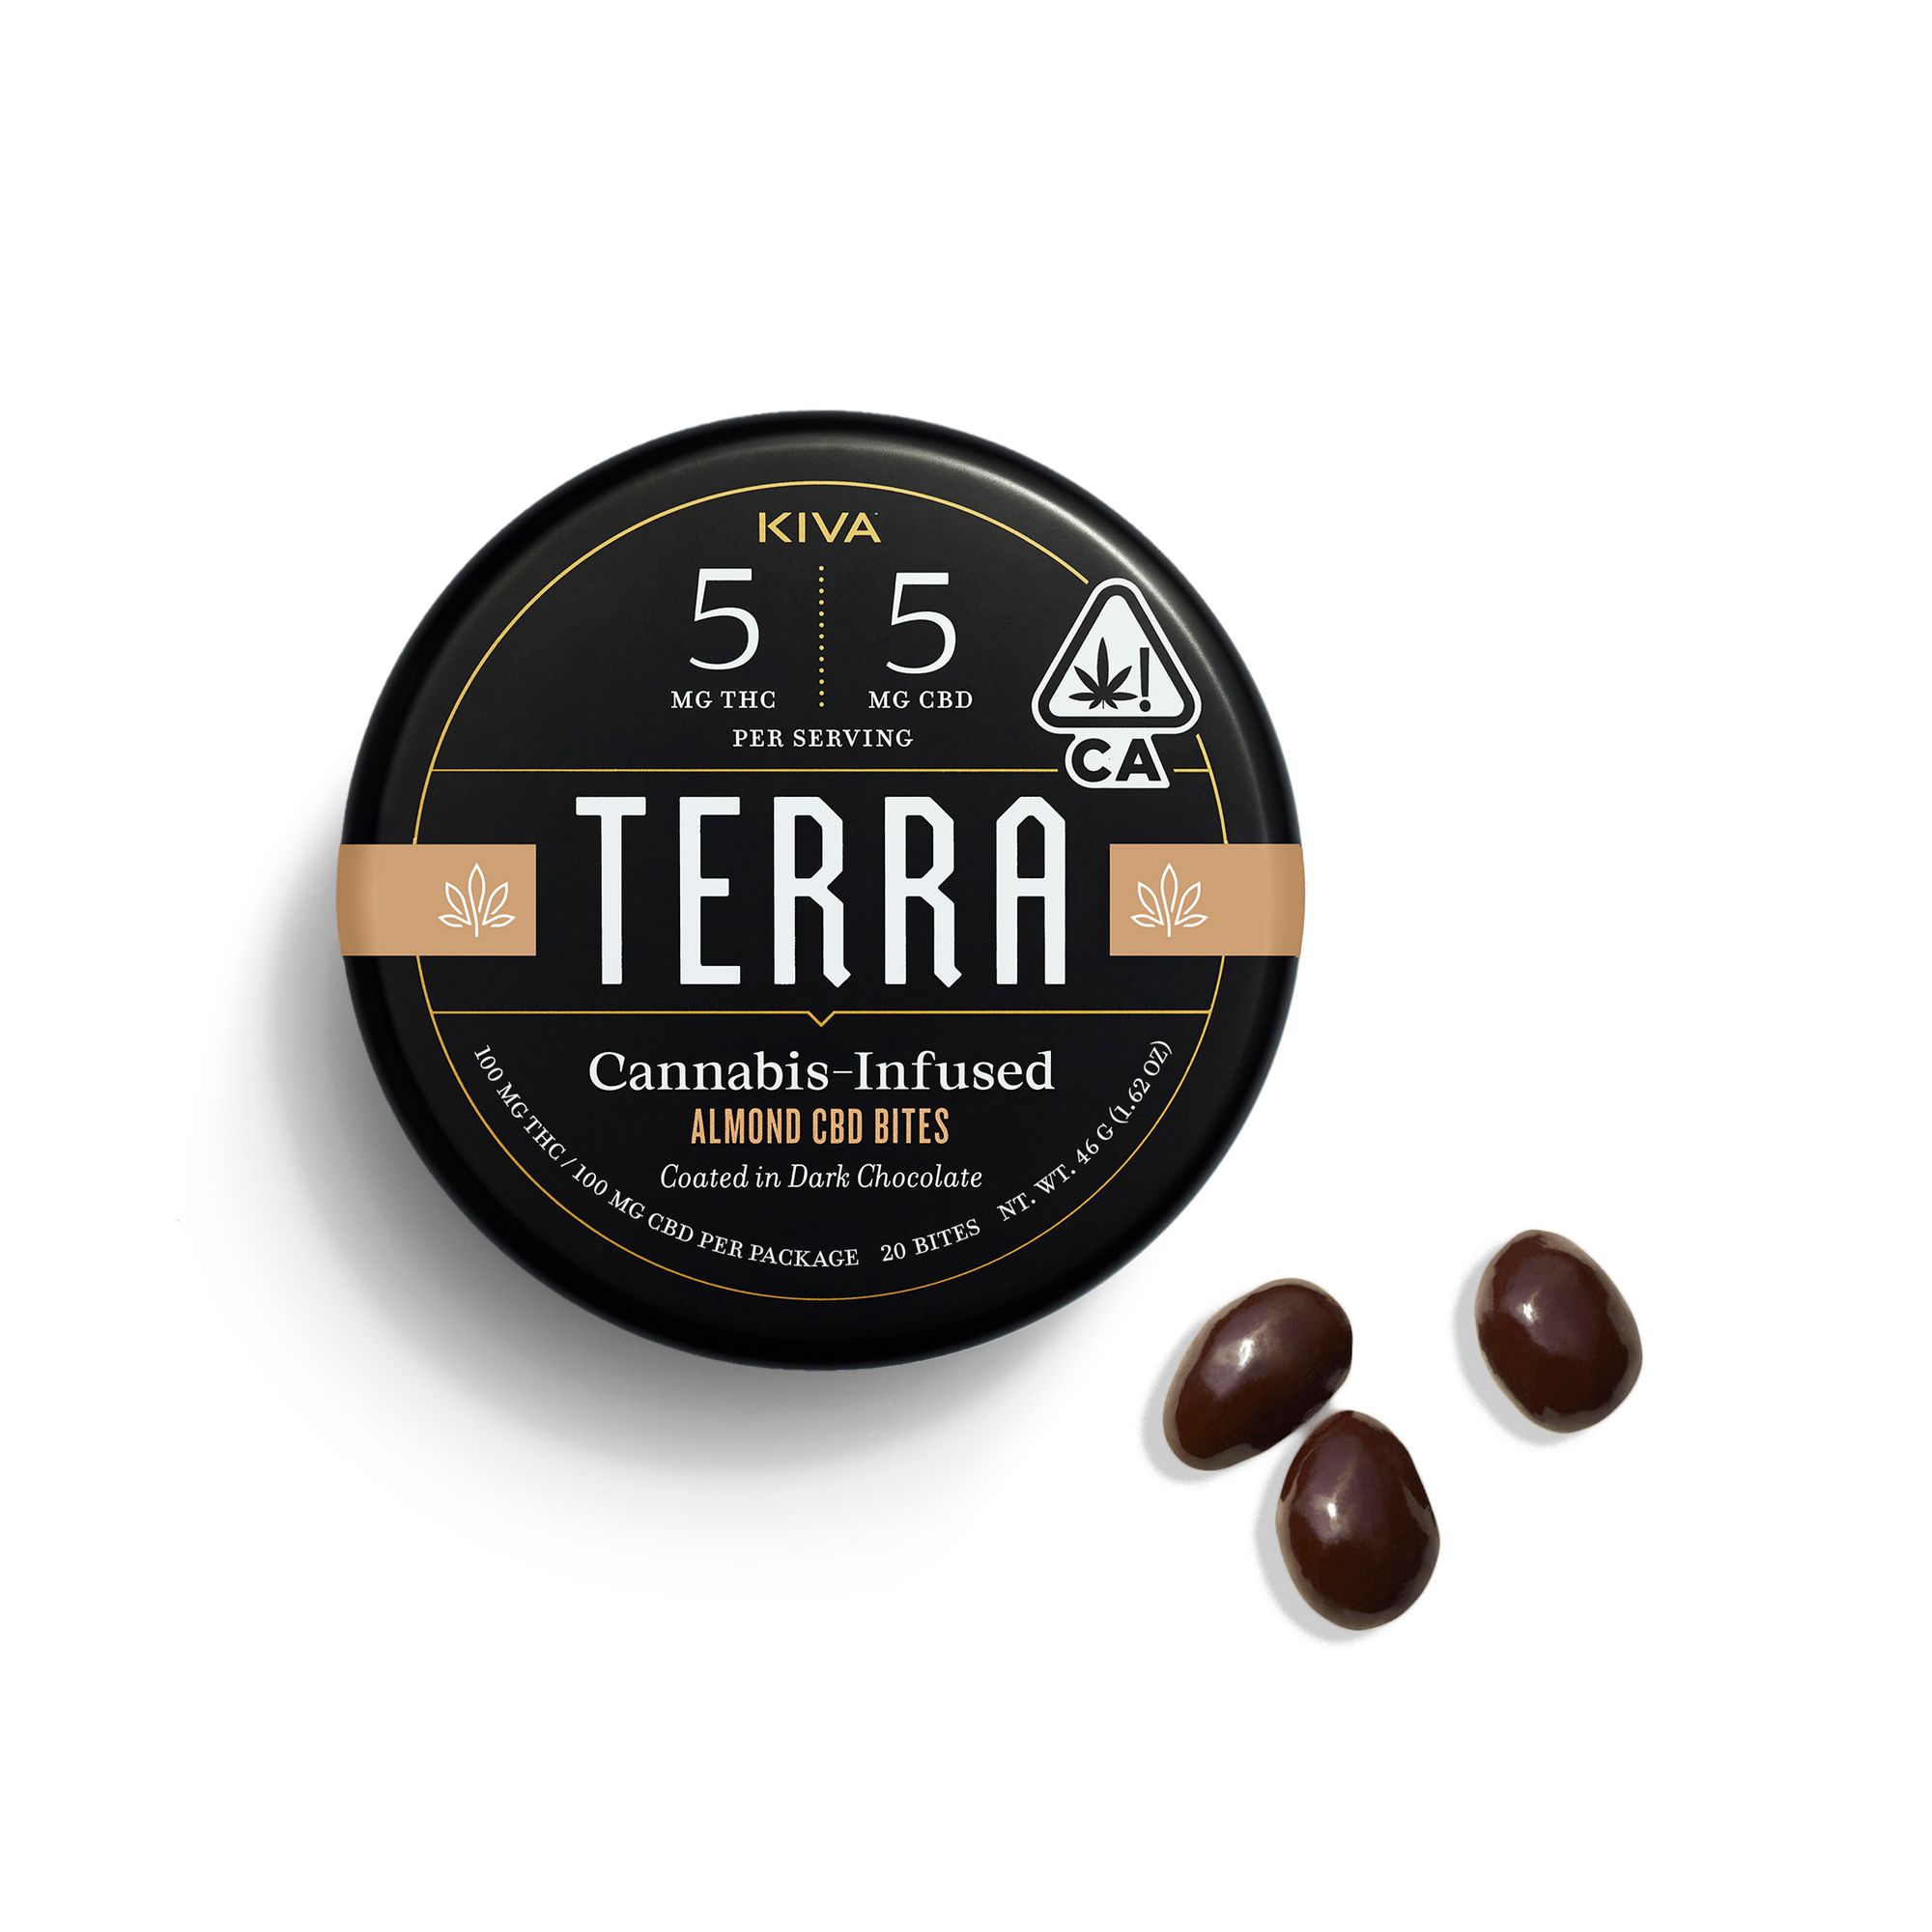 Terra 1:1 CBD Chocolate-Covered Almonds Bites